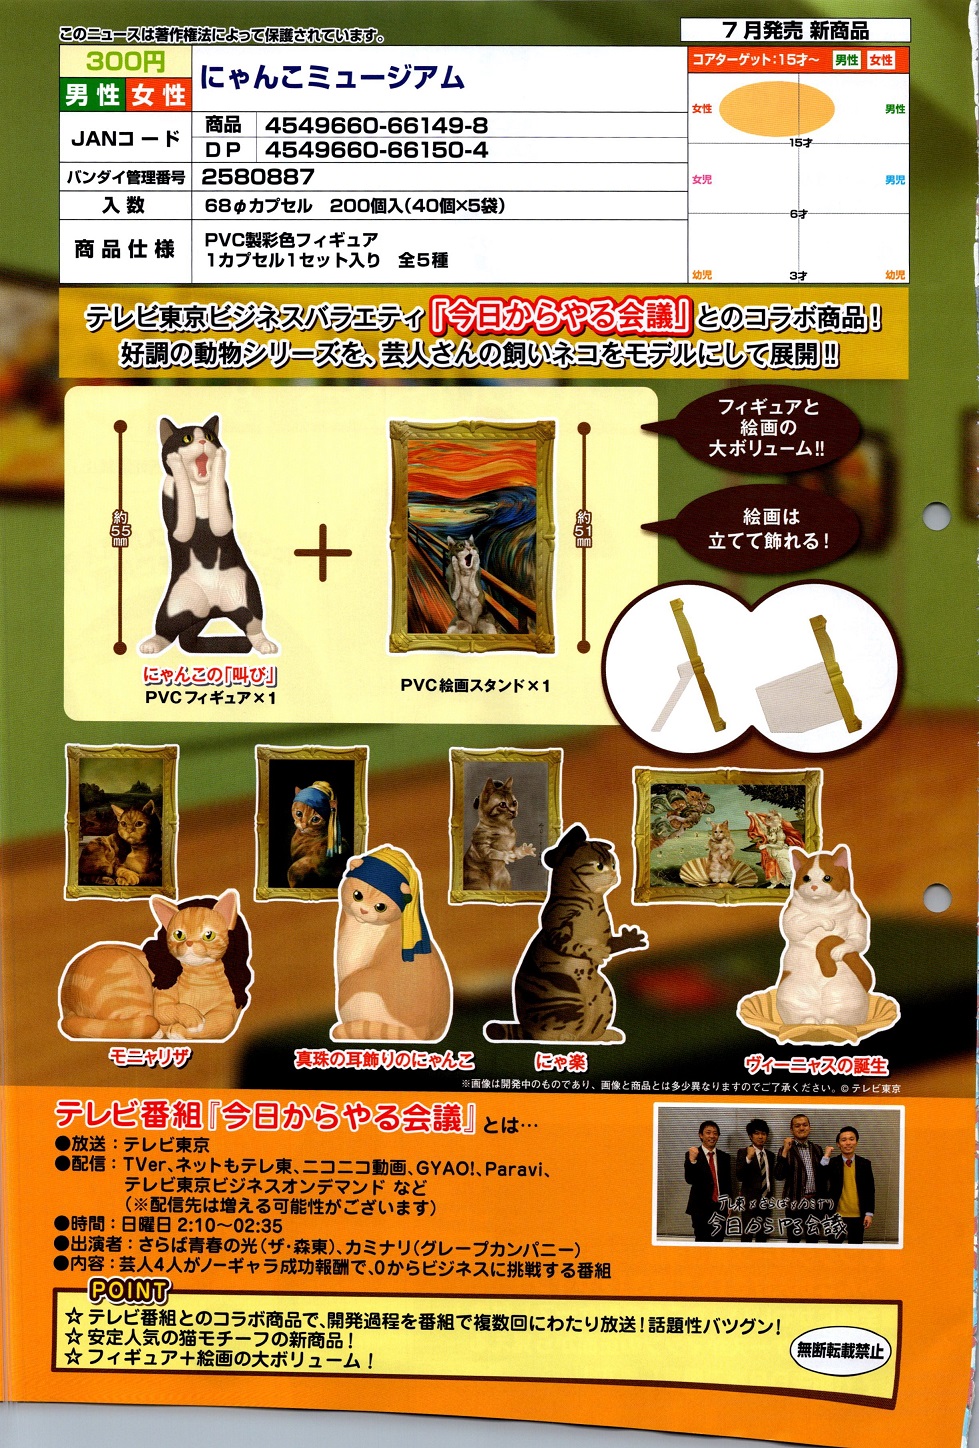 【A】300日元扭蛋 小手办 猫咪博物馆 全5种 (1袋40个) 661498